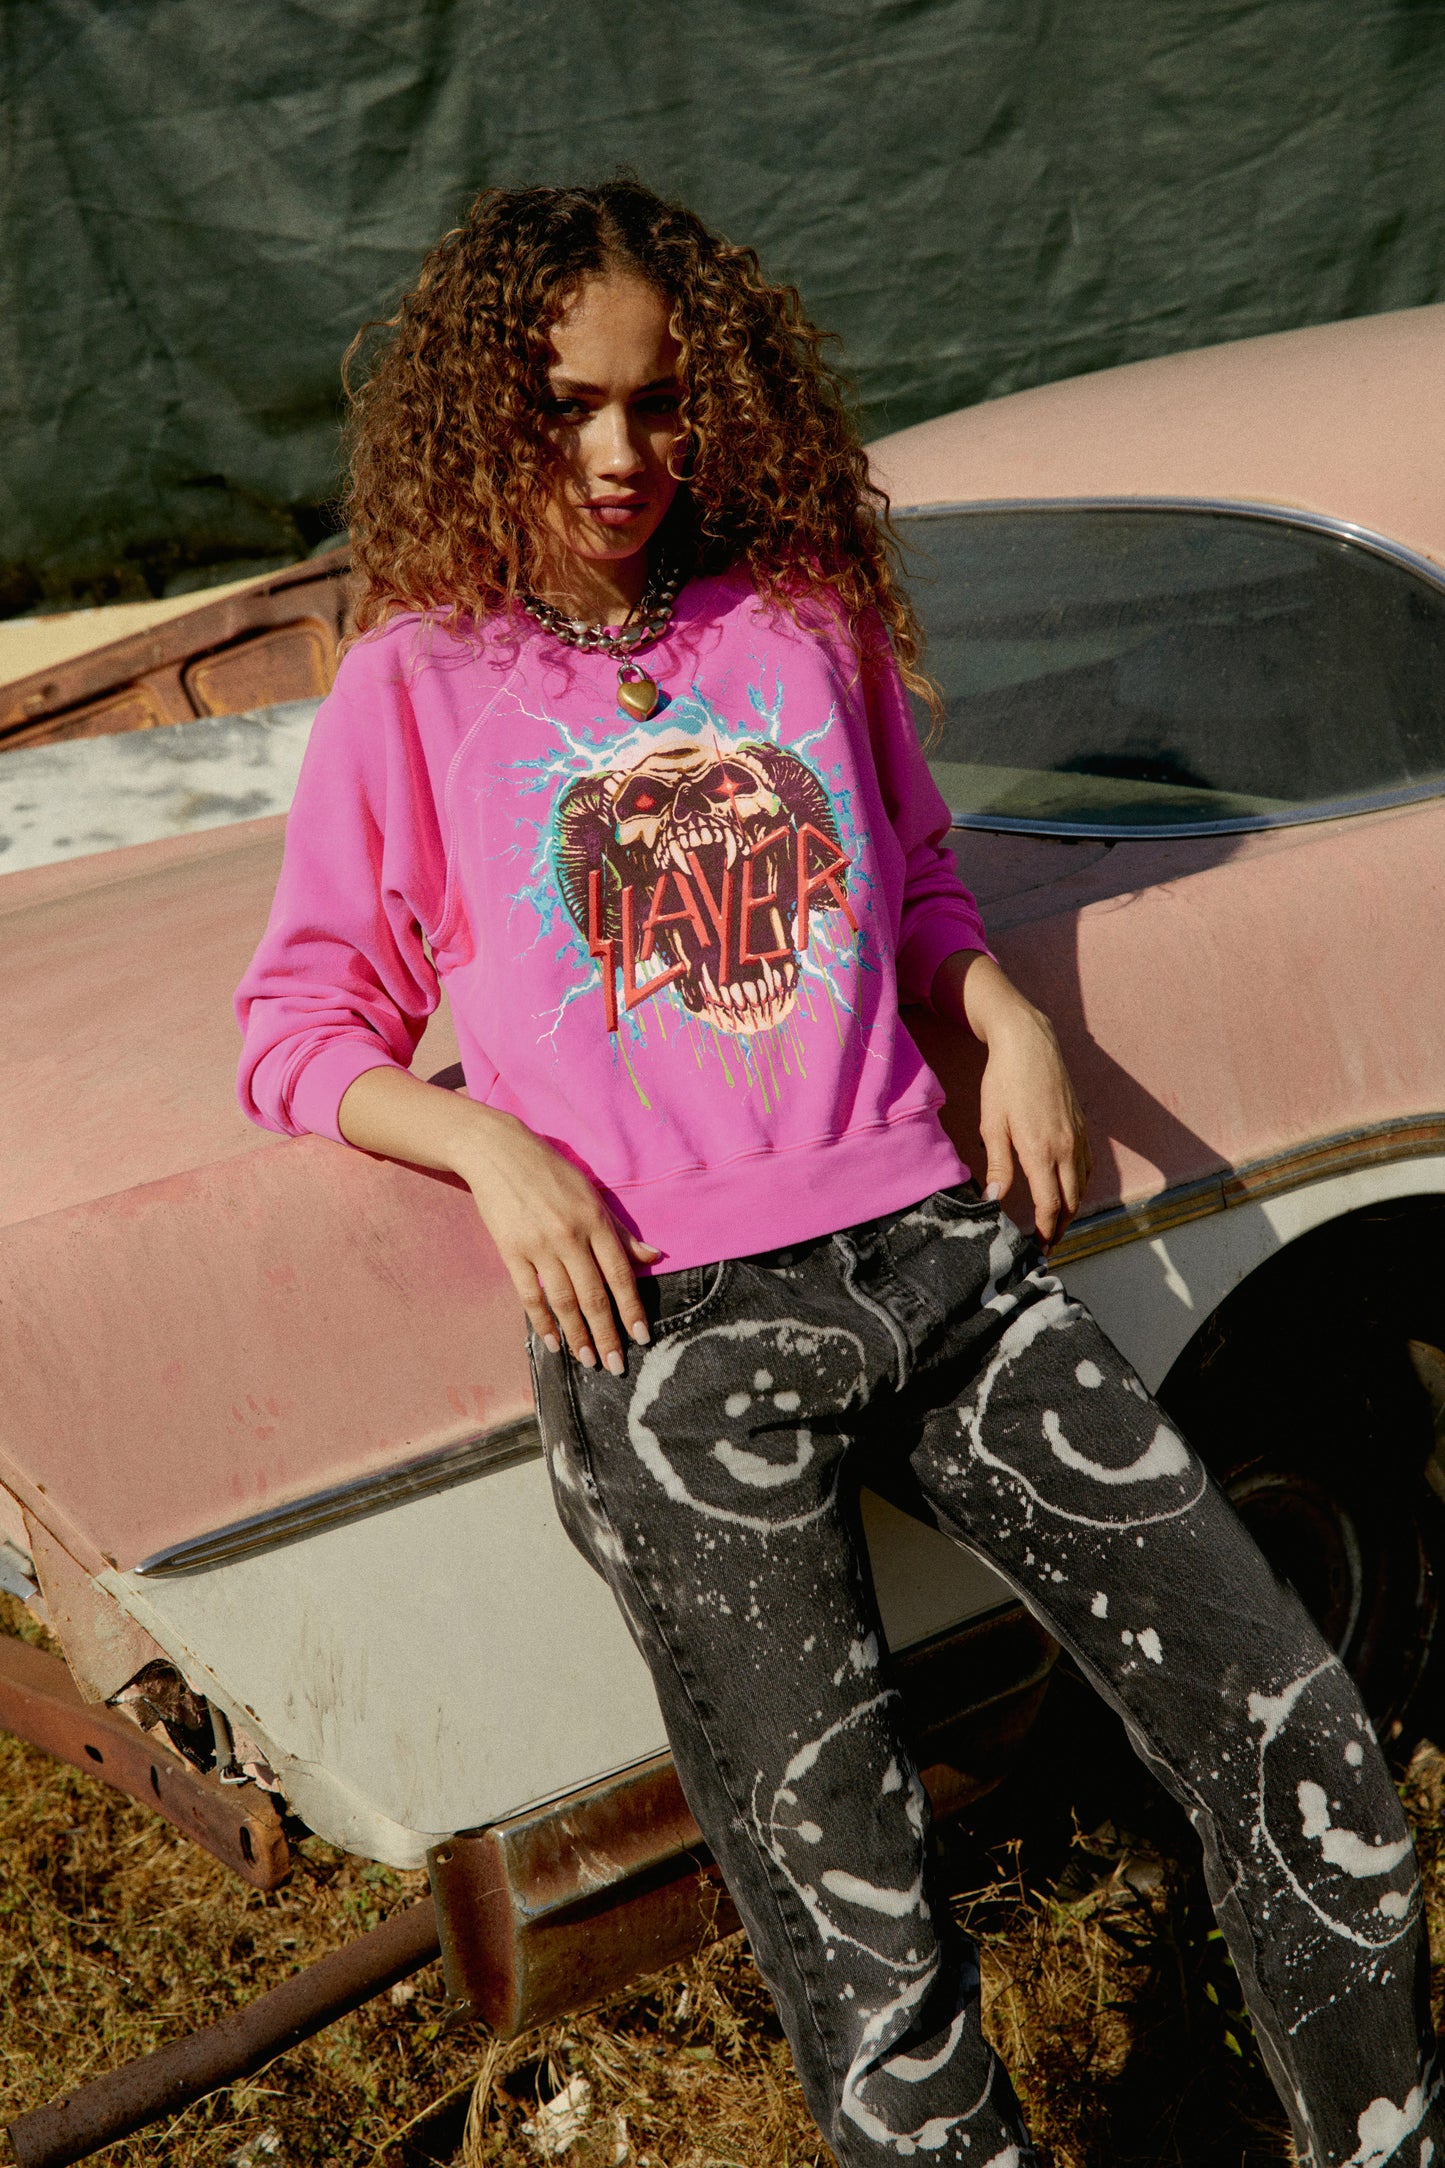 Model wearing Slayer graphic sweatshirt in pink with lightning artwork.